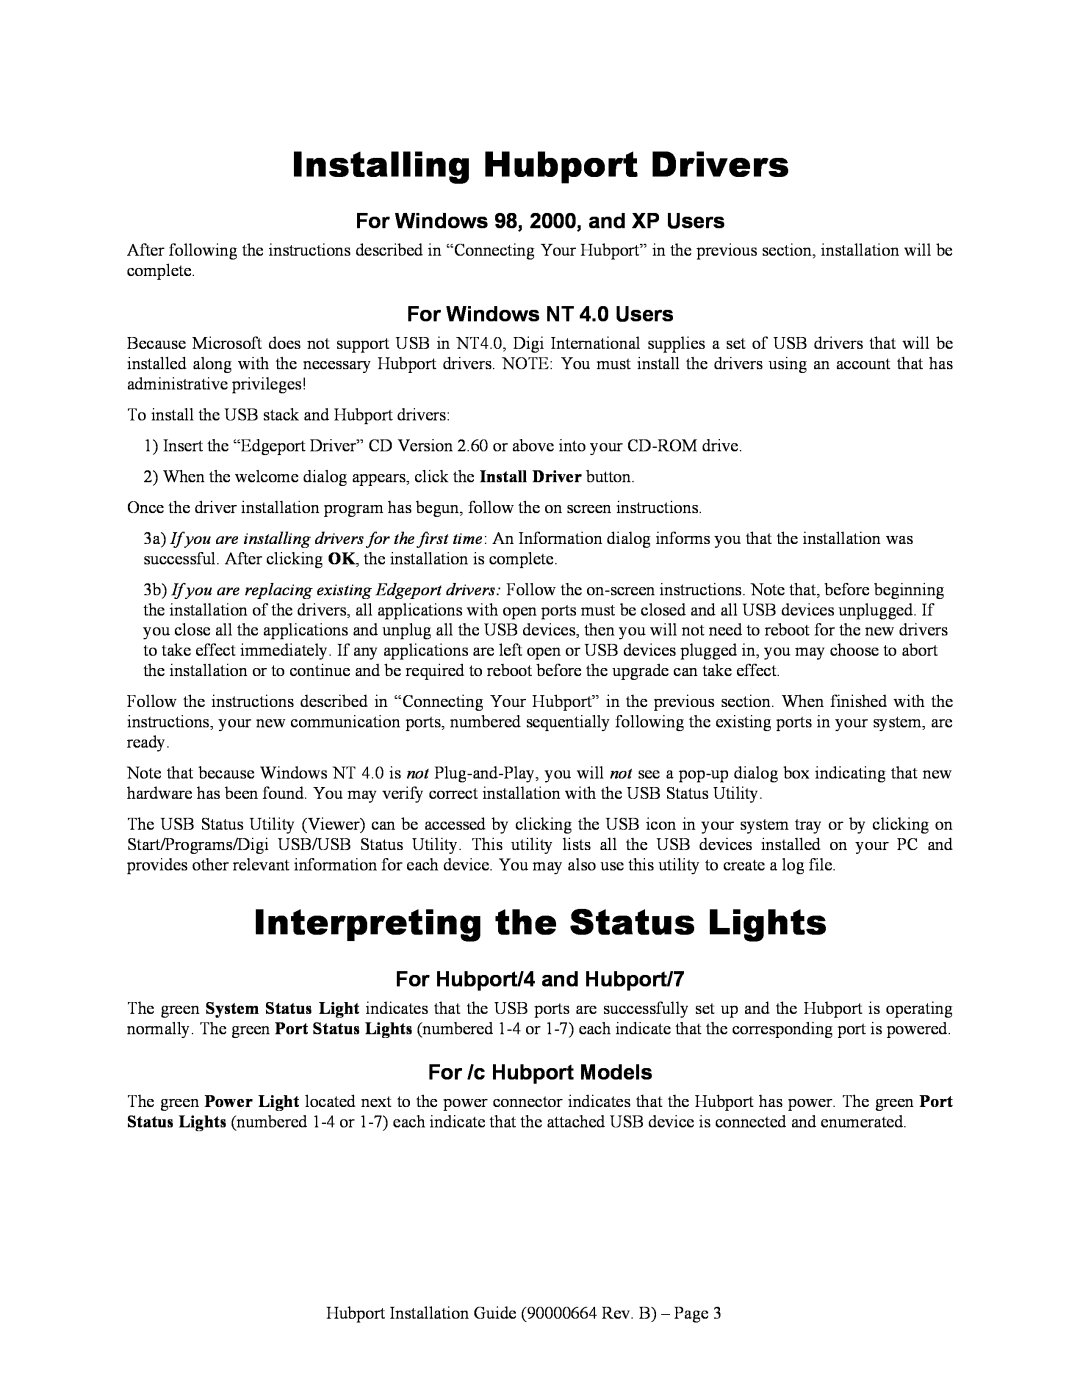 Digi Hubport/4c DC manual Installing Hubport Drivers, Interpreting the Status Lights, For Windows 98, 2000, and XP Users 